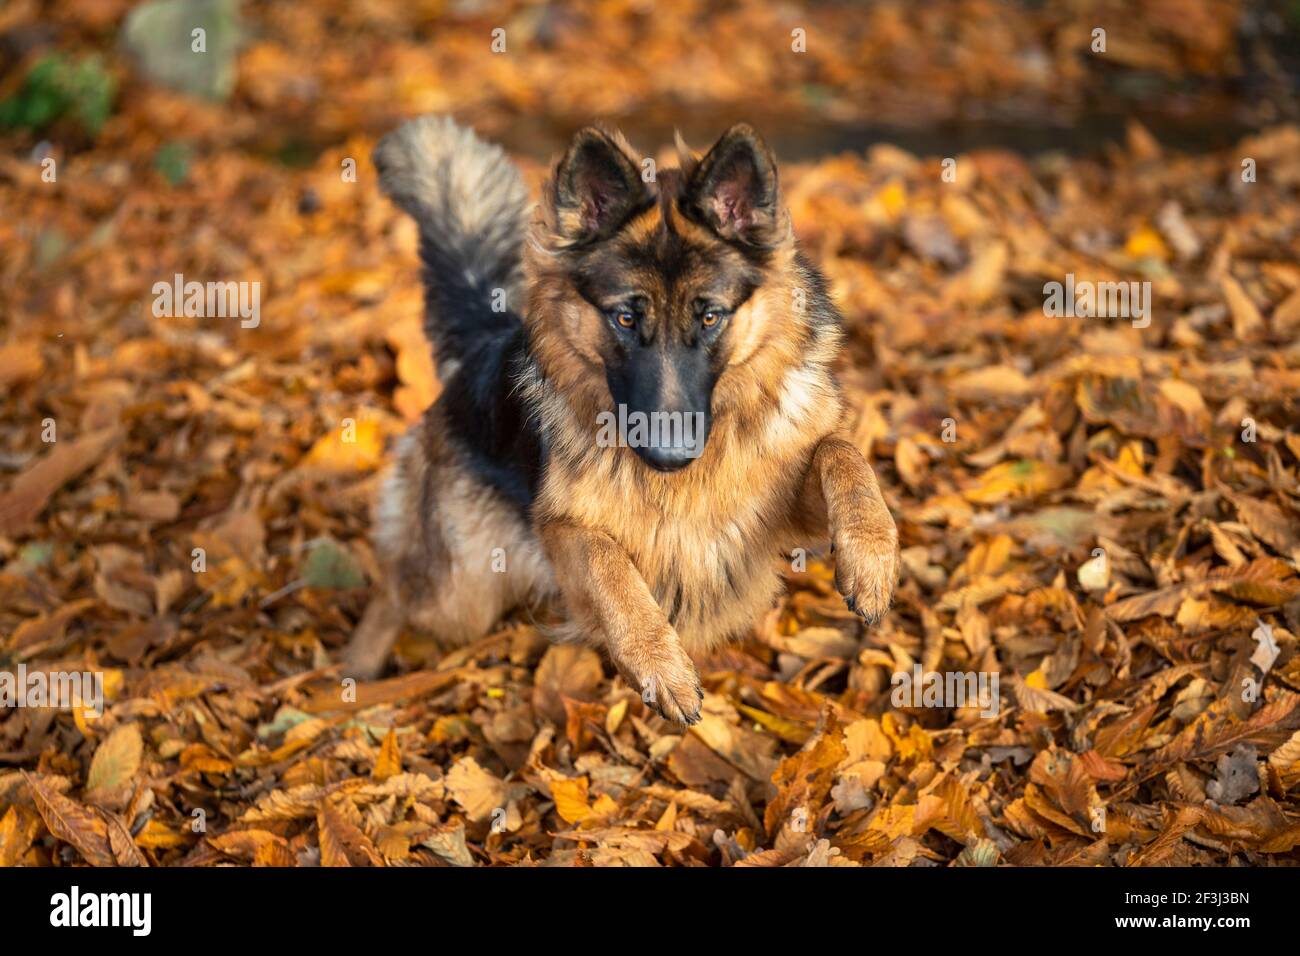 Longhaired German Shepherd. Adult dog running in leaf litter. Germany Stock Photo